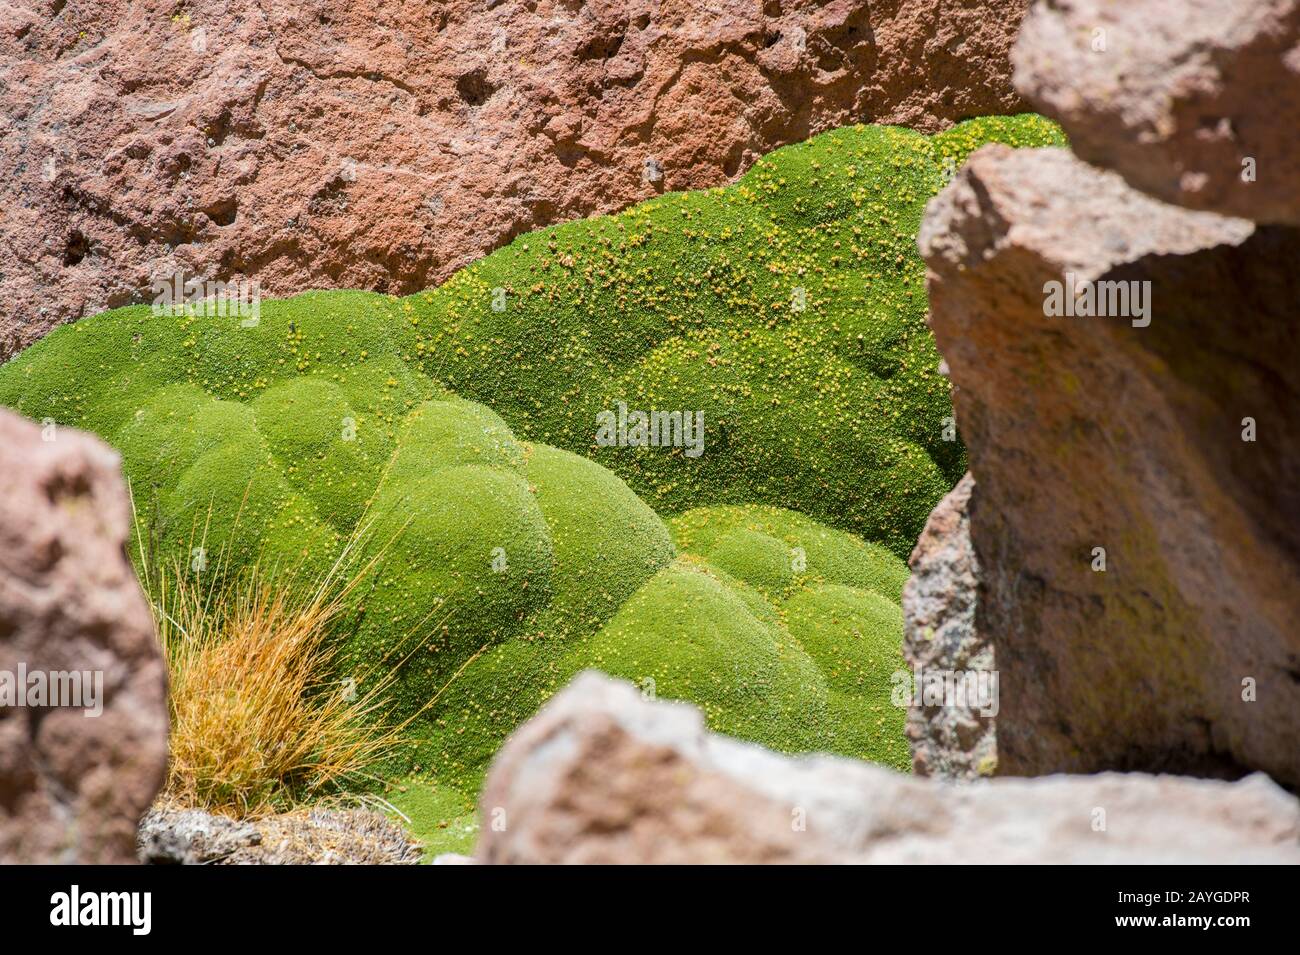 Llareta ou Yareta (Azorella compacta) dans le bassin géothermique El Tatio Geysers près de San Pedro de Atacama dans le désert d'Atacama, dans le nord du Chili. Banque D'Images